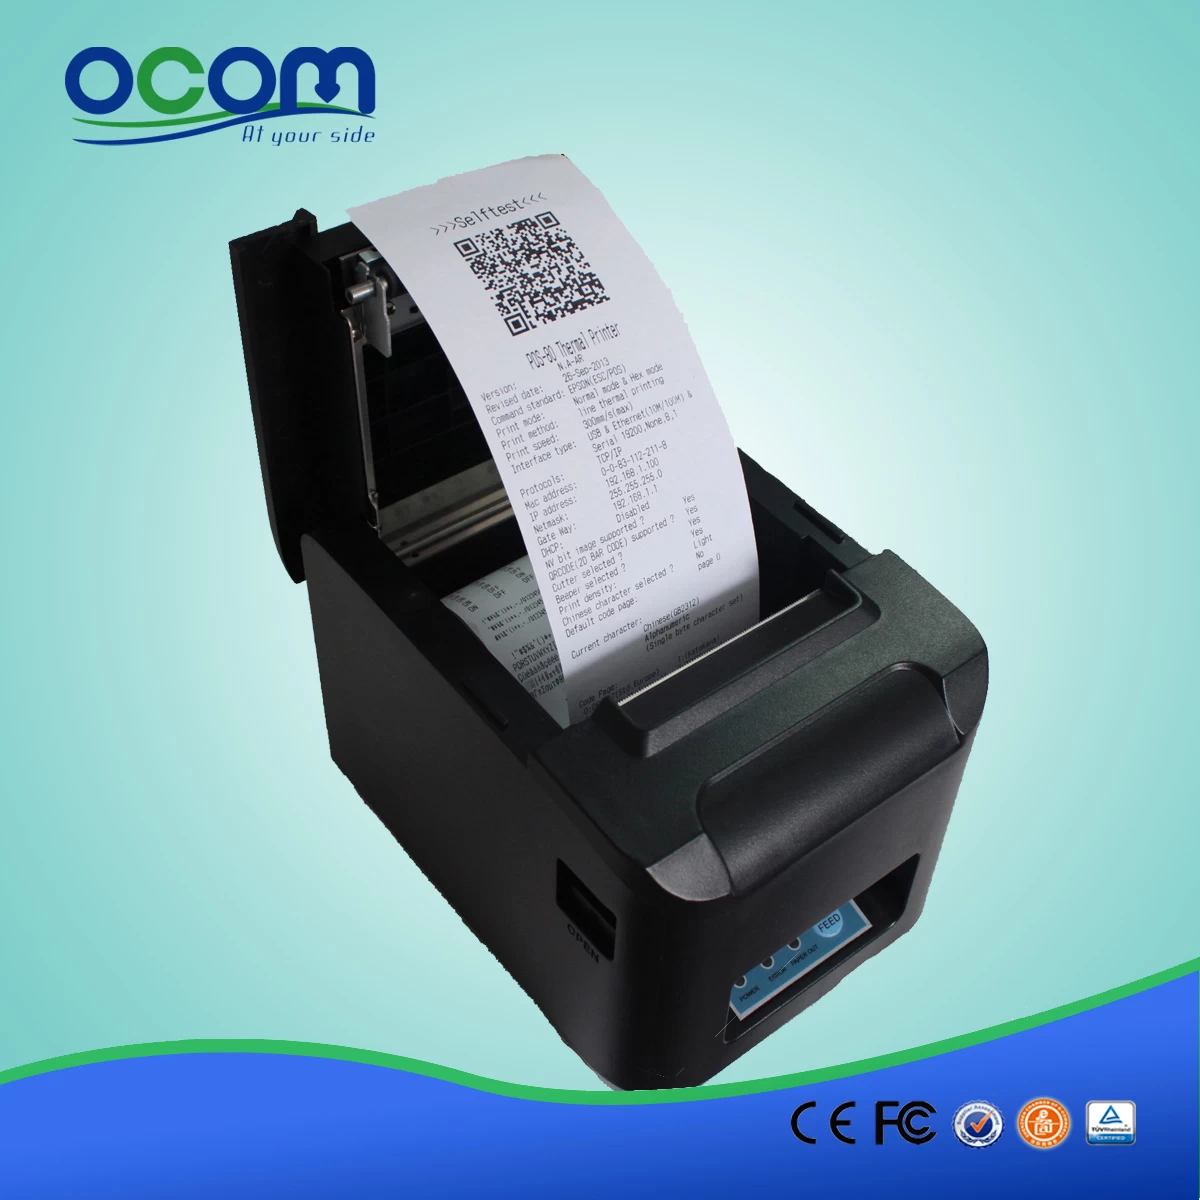 OCPP-808-URL Auto Cutter Ethernet POS Thermal Receipt Printer